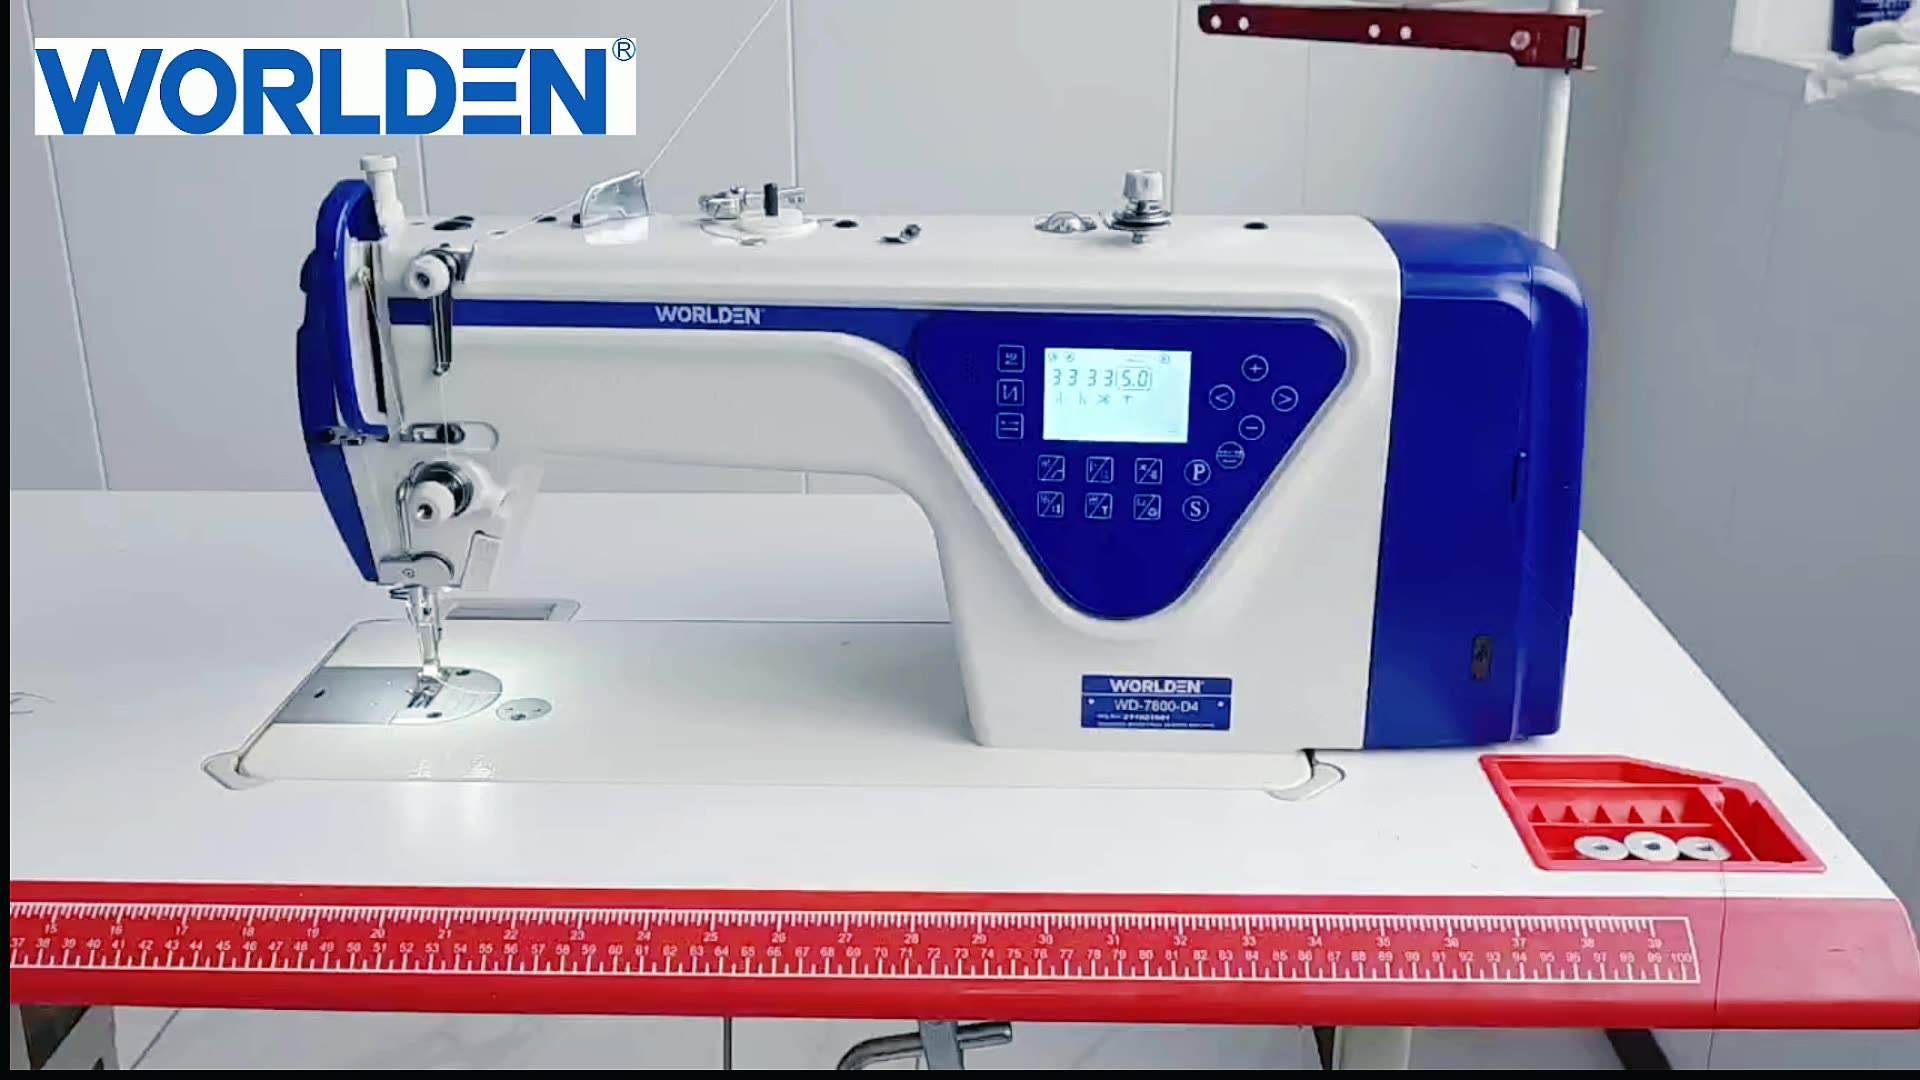 WD-7800-D4 High Speed Auto- thread Trimmer Auto- reversing stitch, Auto Needle Position Pattern Lockstitch Sewing Machine